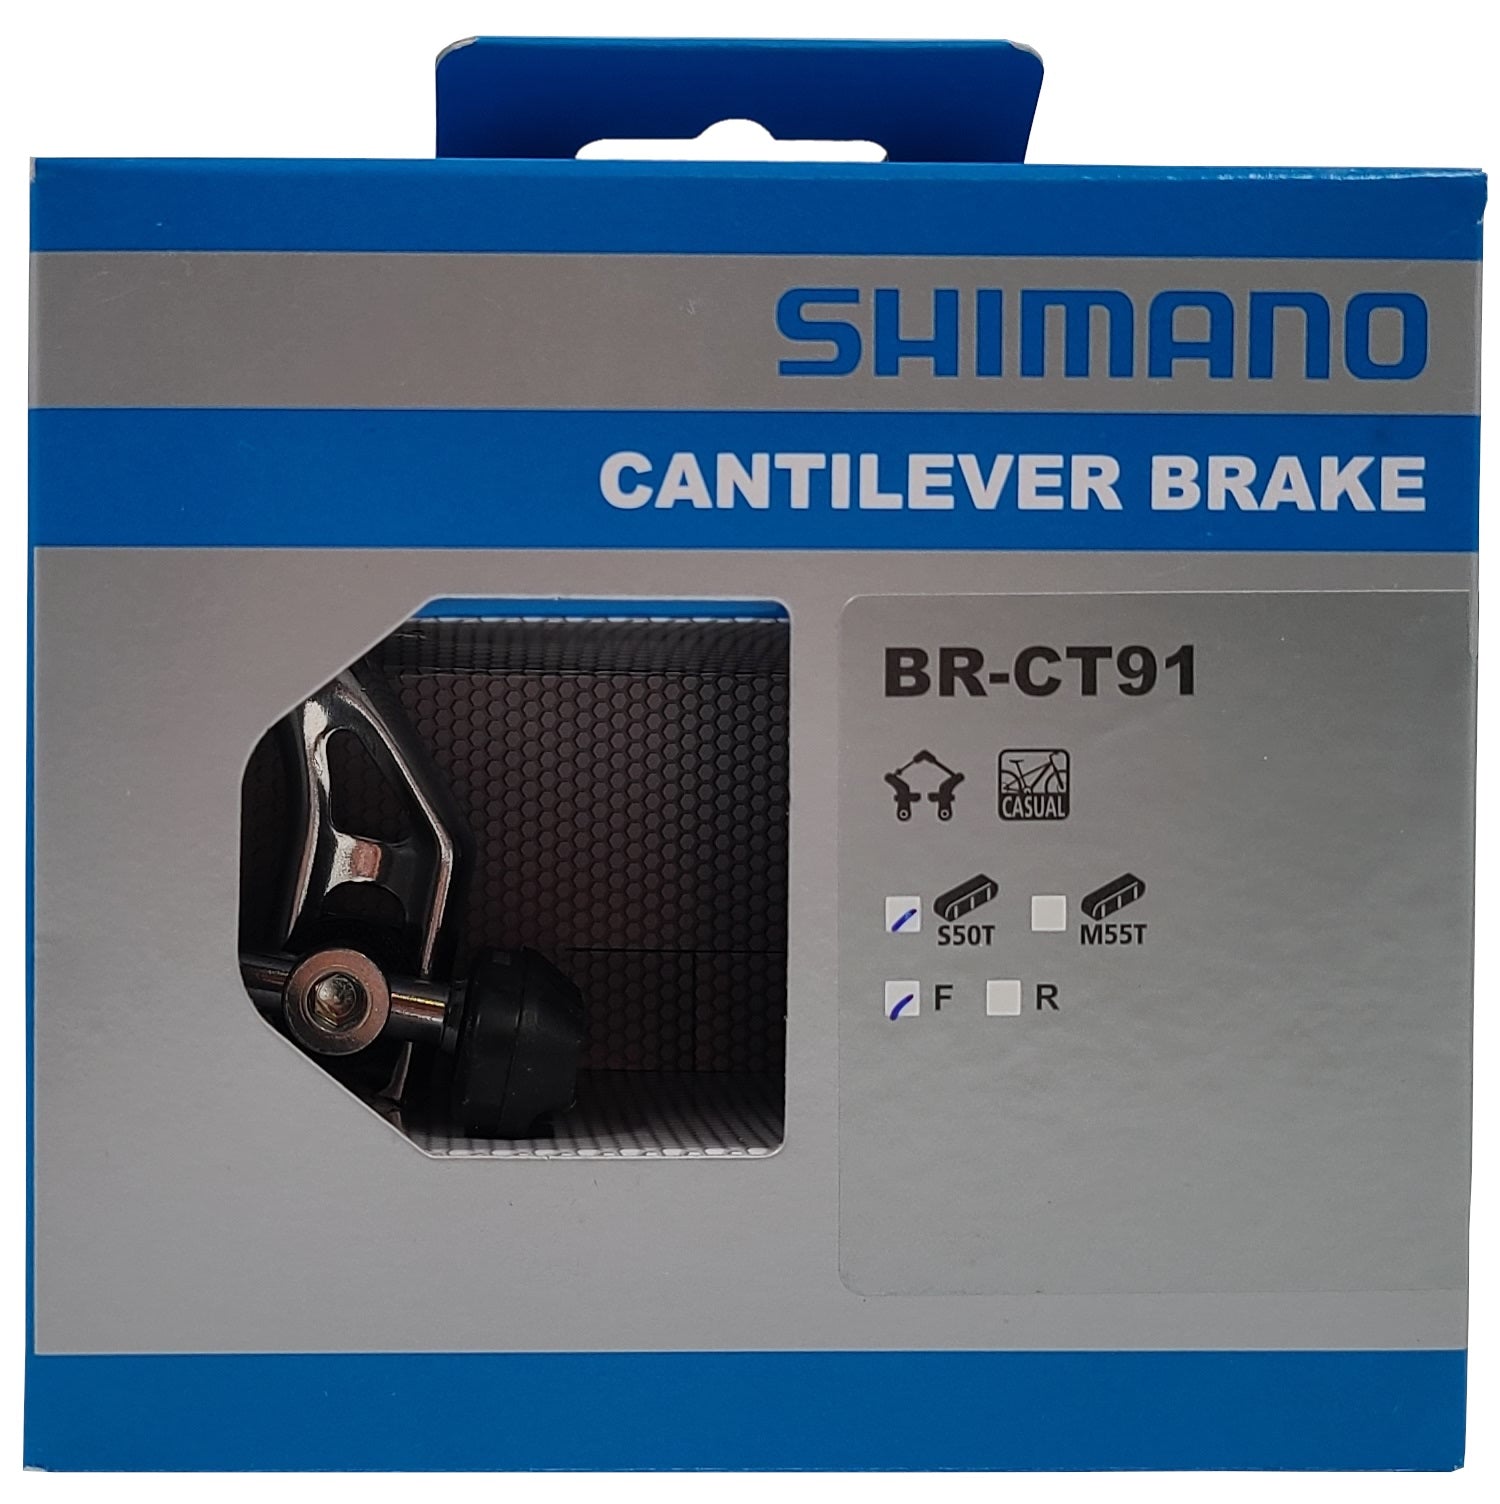 Shimano Altus BR-CT91 Cantilever Brake - The Bikesmiths